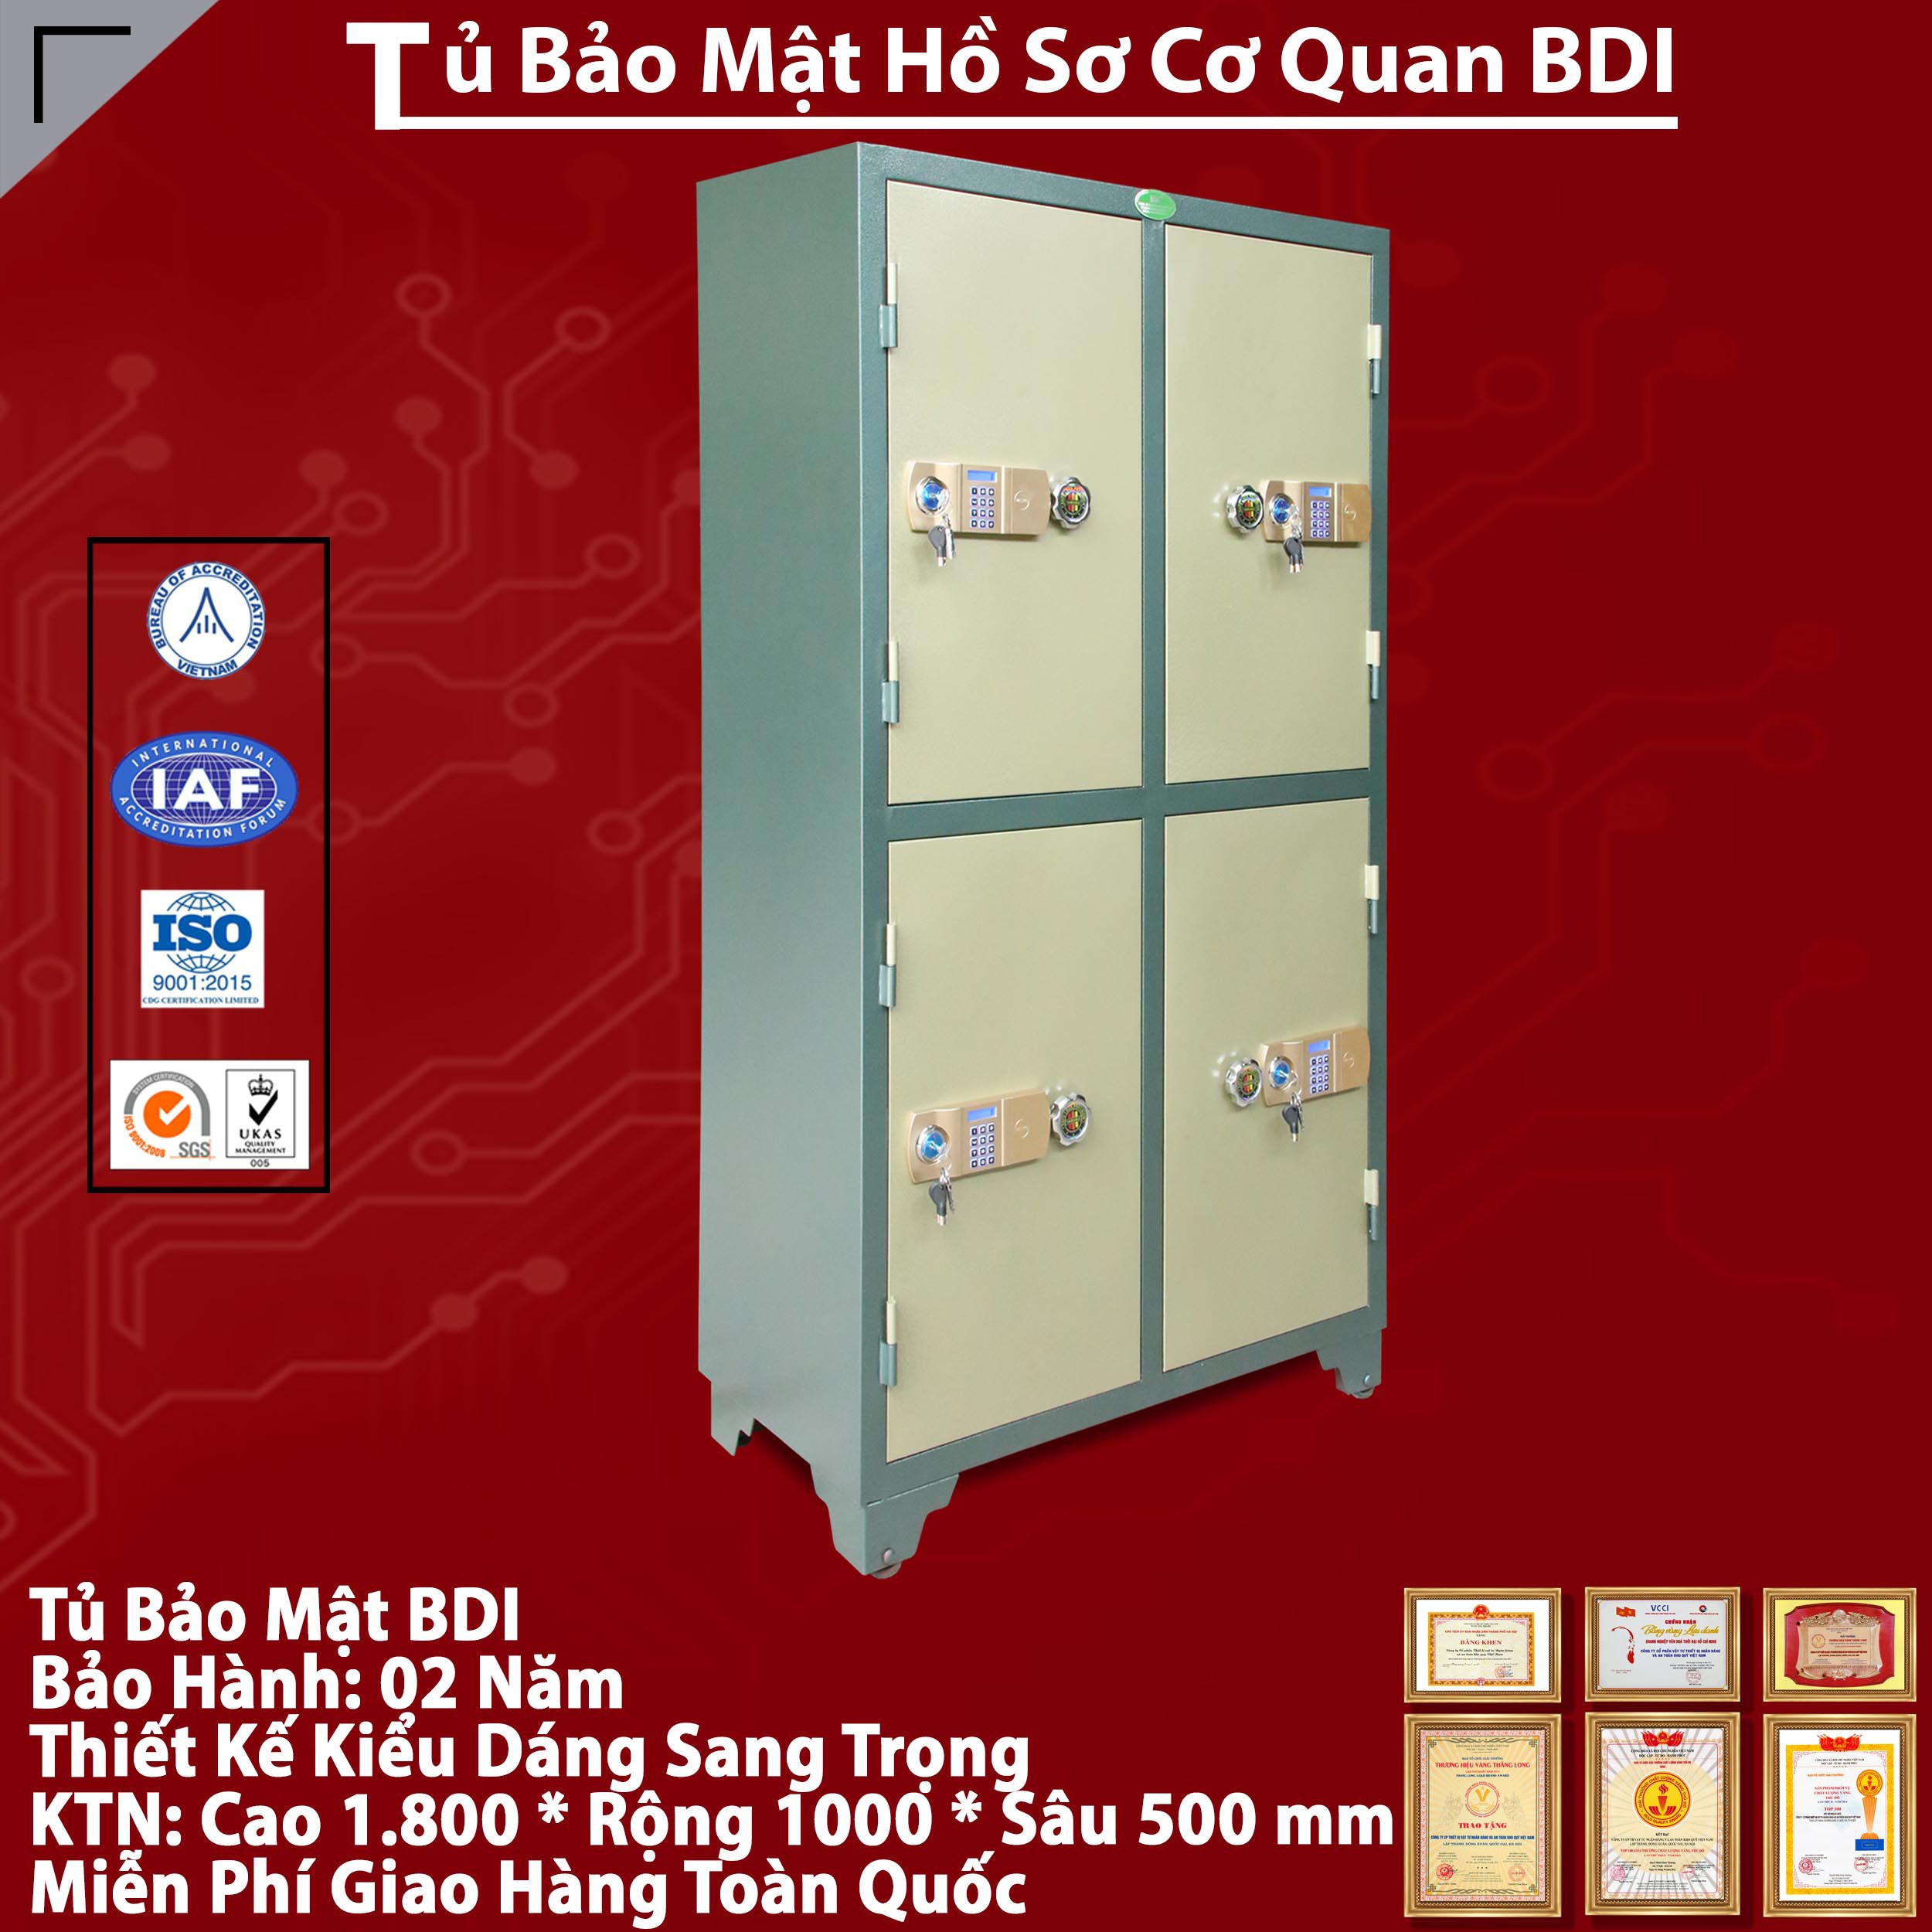 Tu Bao Mat 4 Canh Hien Dai Cao Cap